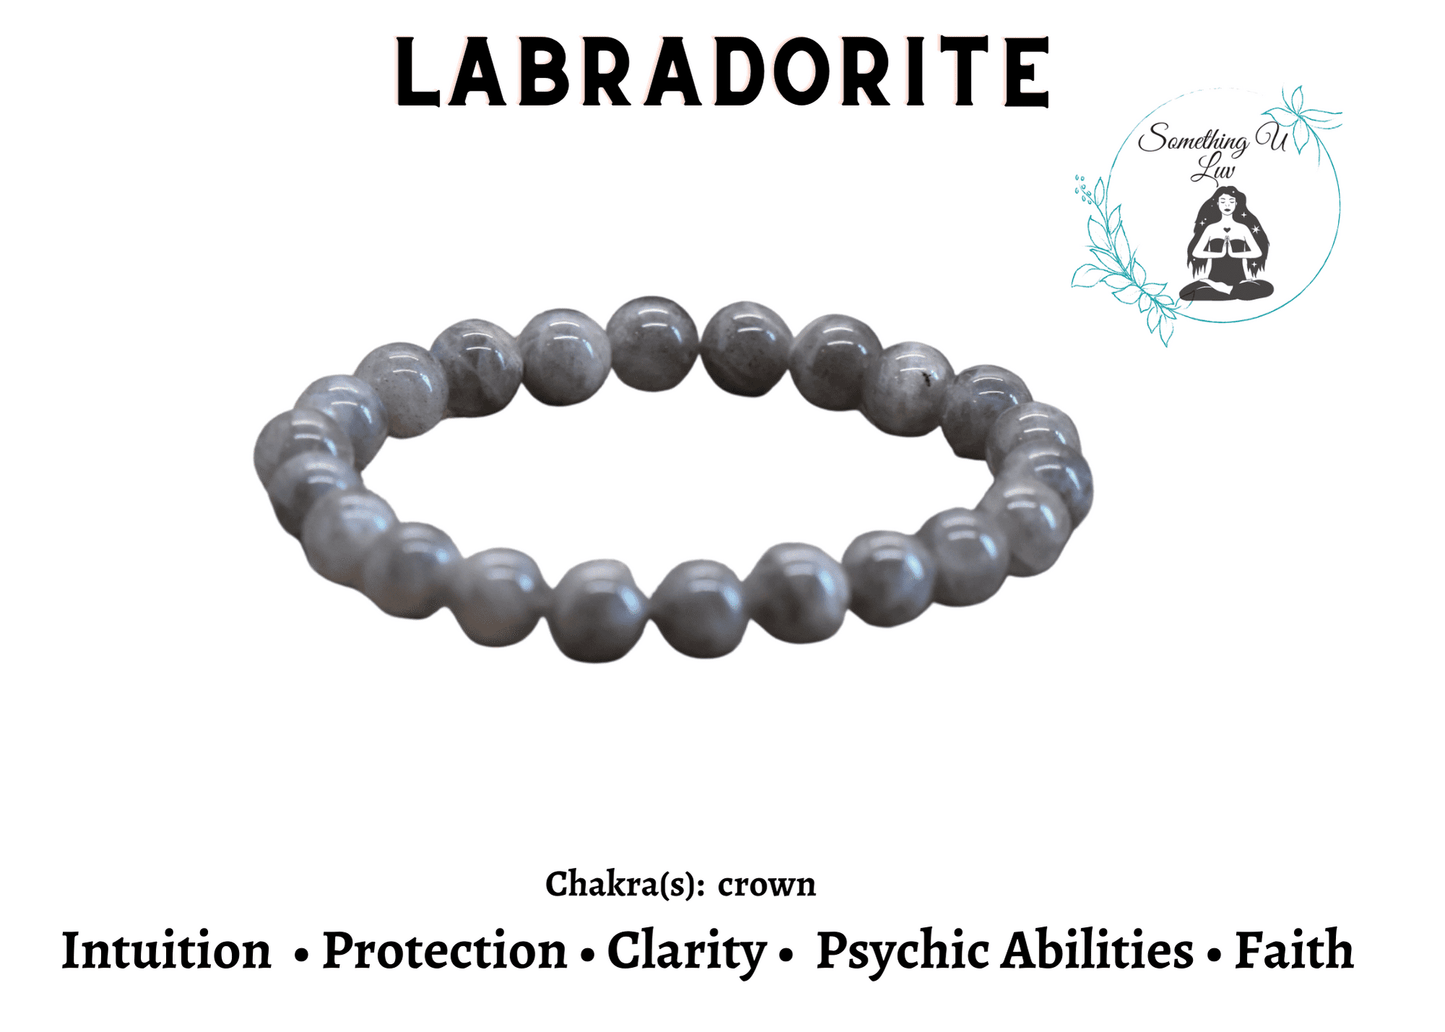 Bracelet - Reg Agate, Azurite Malachite, Labradorite Natural Stone Healing Crystal Bead Bracelets